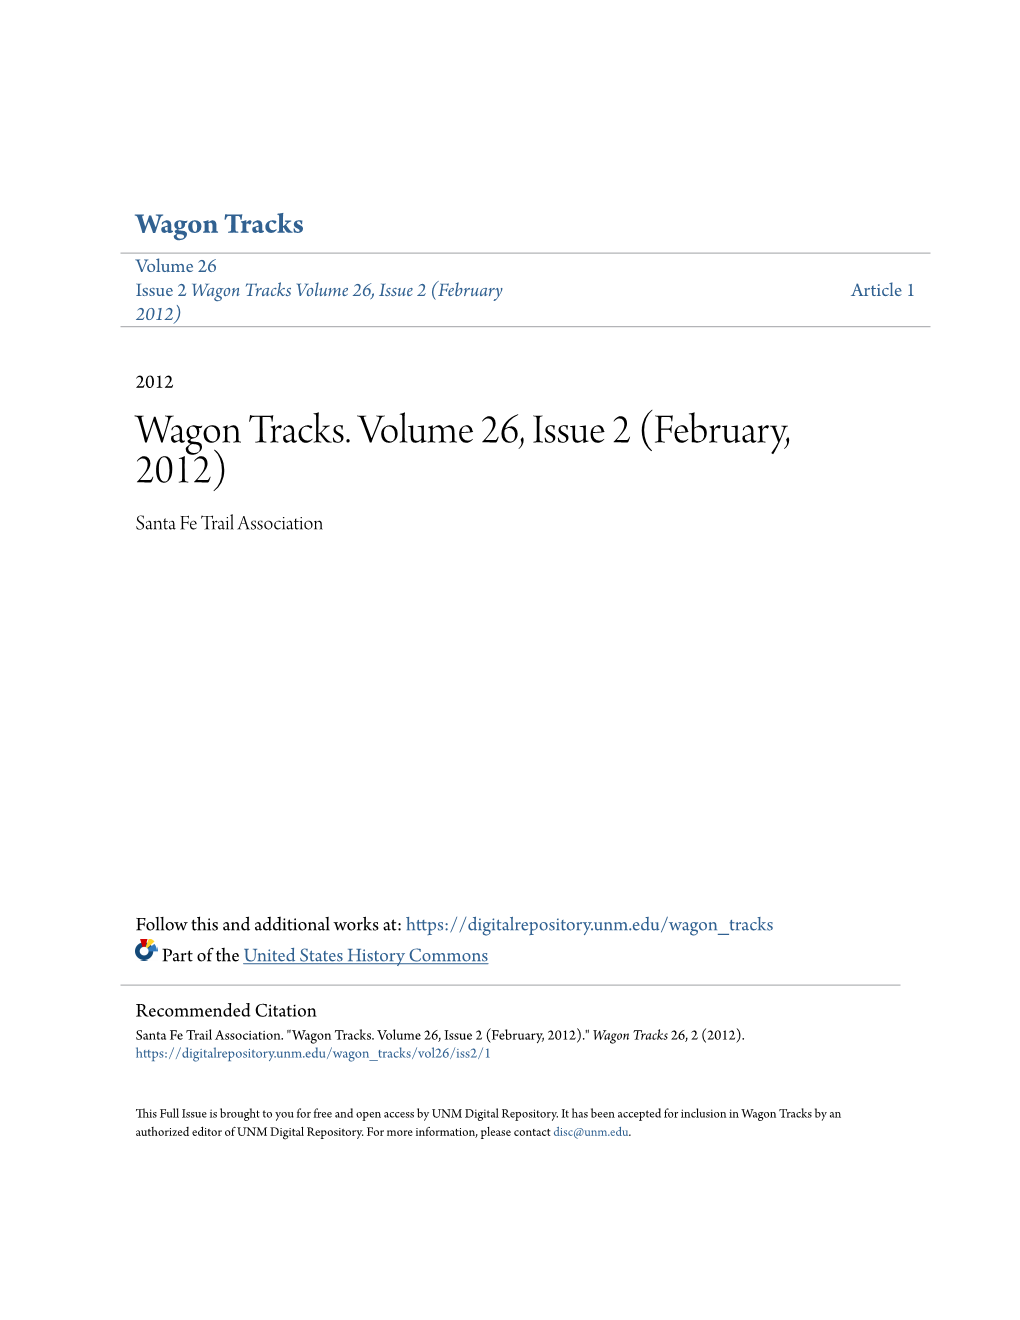 Wagon Tracks. Volume 26, Issue 2 (February, 2012) Santa Fe Trail Association